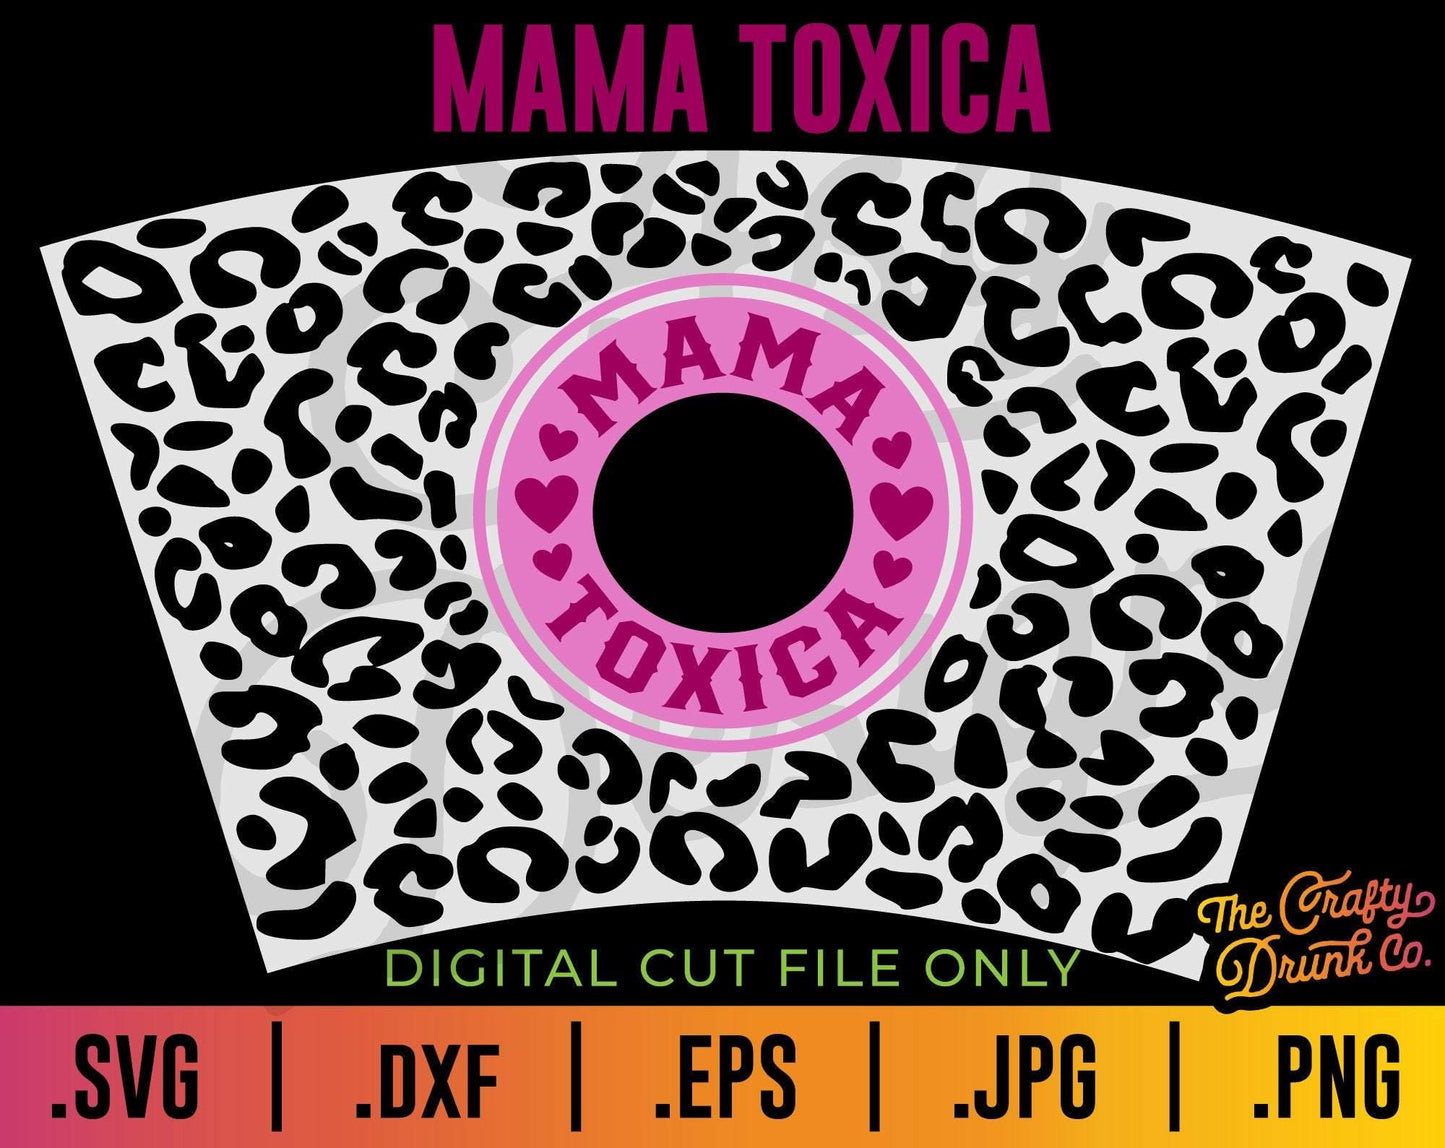 Mama Toxica Mini Toxica Cup Wrap Bundle - TheCraftyDrunkCo